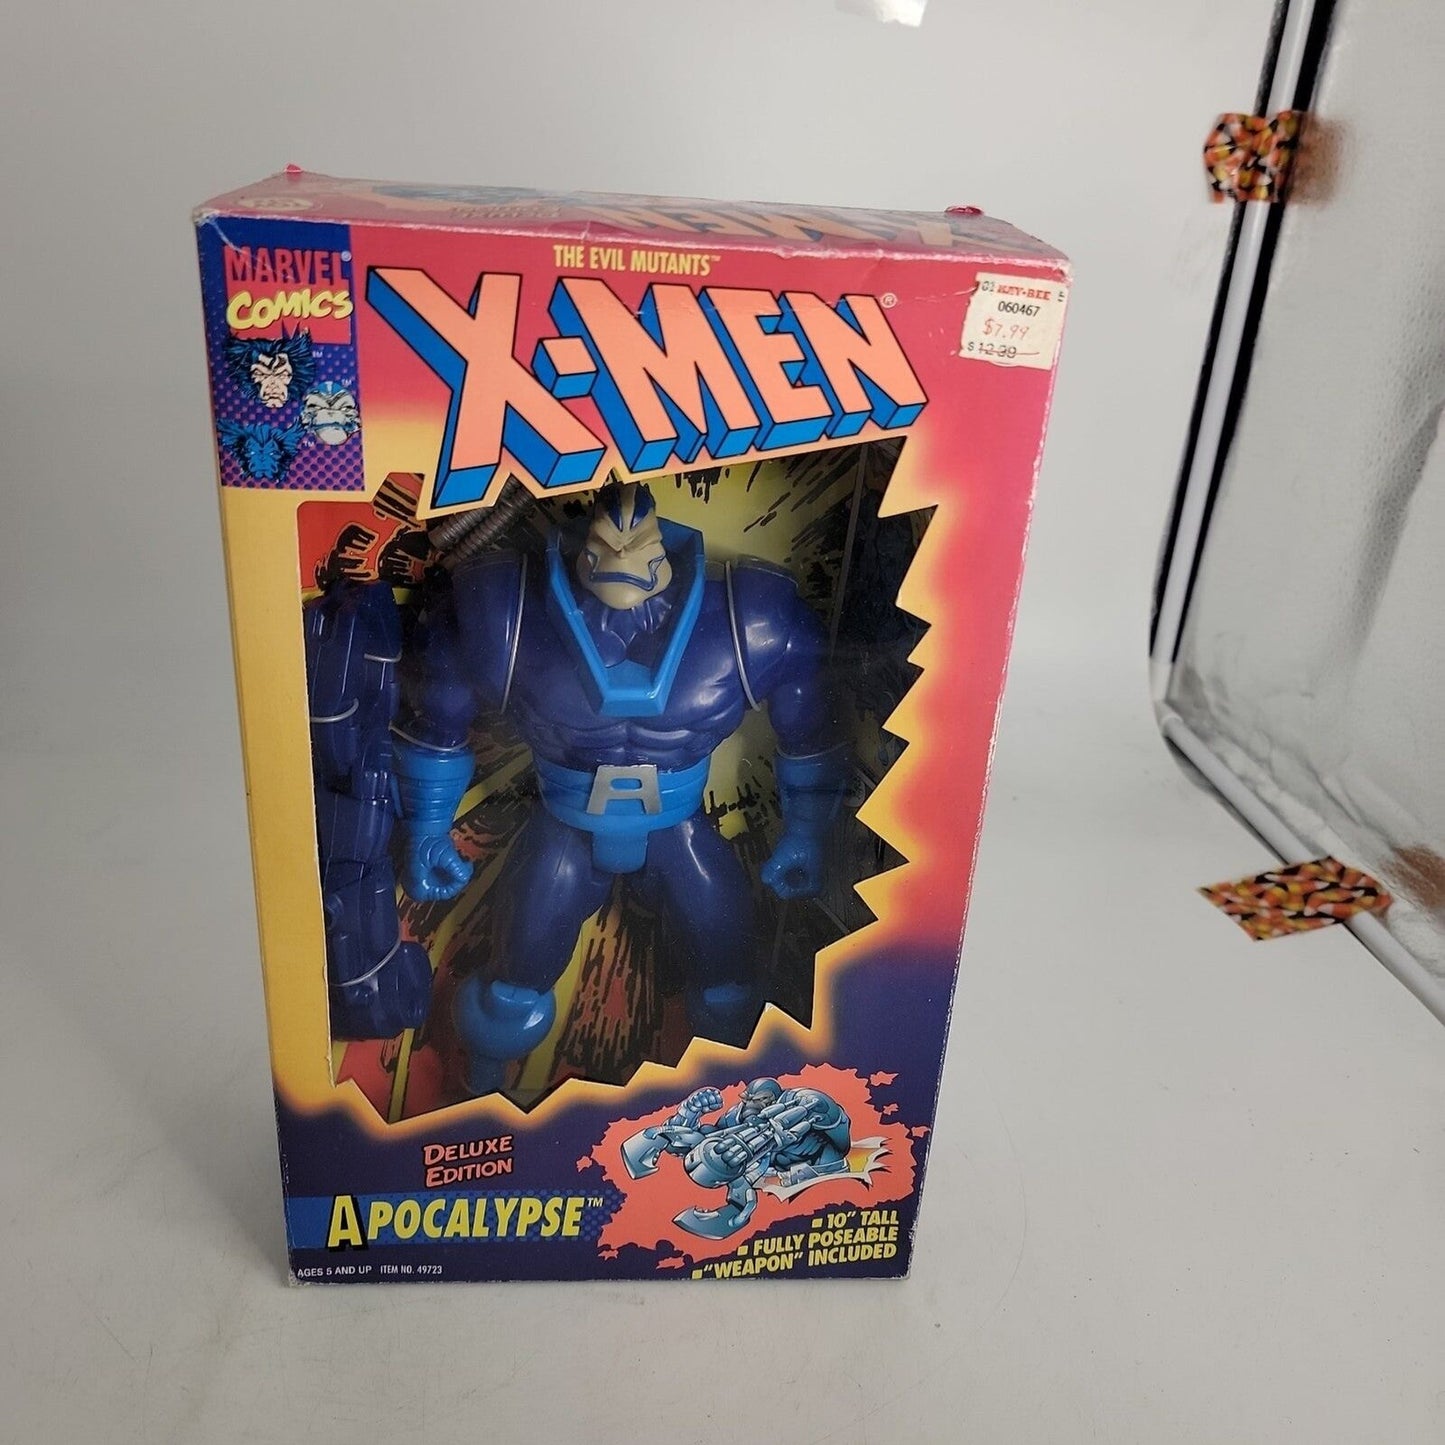 The Evil Mutants X-Men Deluxe Edition Apocalypse